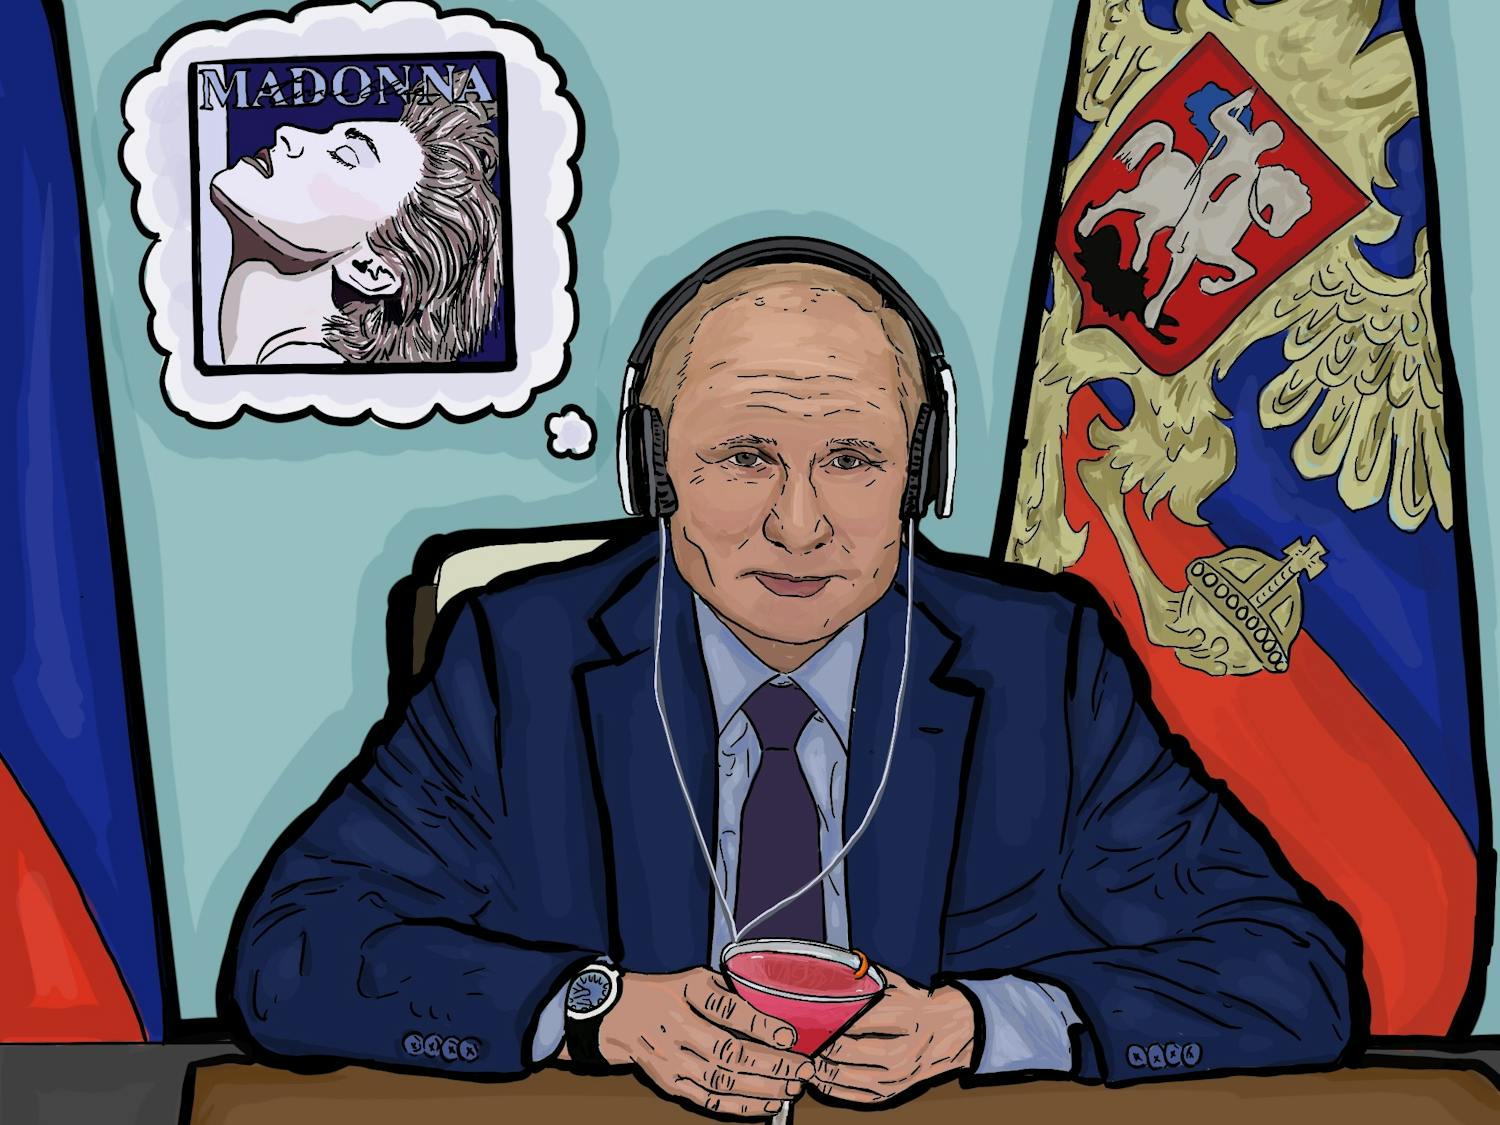 Putin,Madonna,Cosmo.jpg